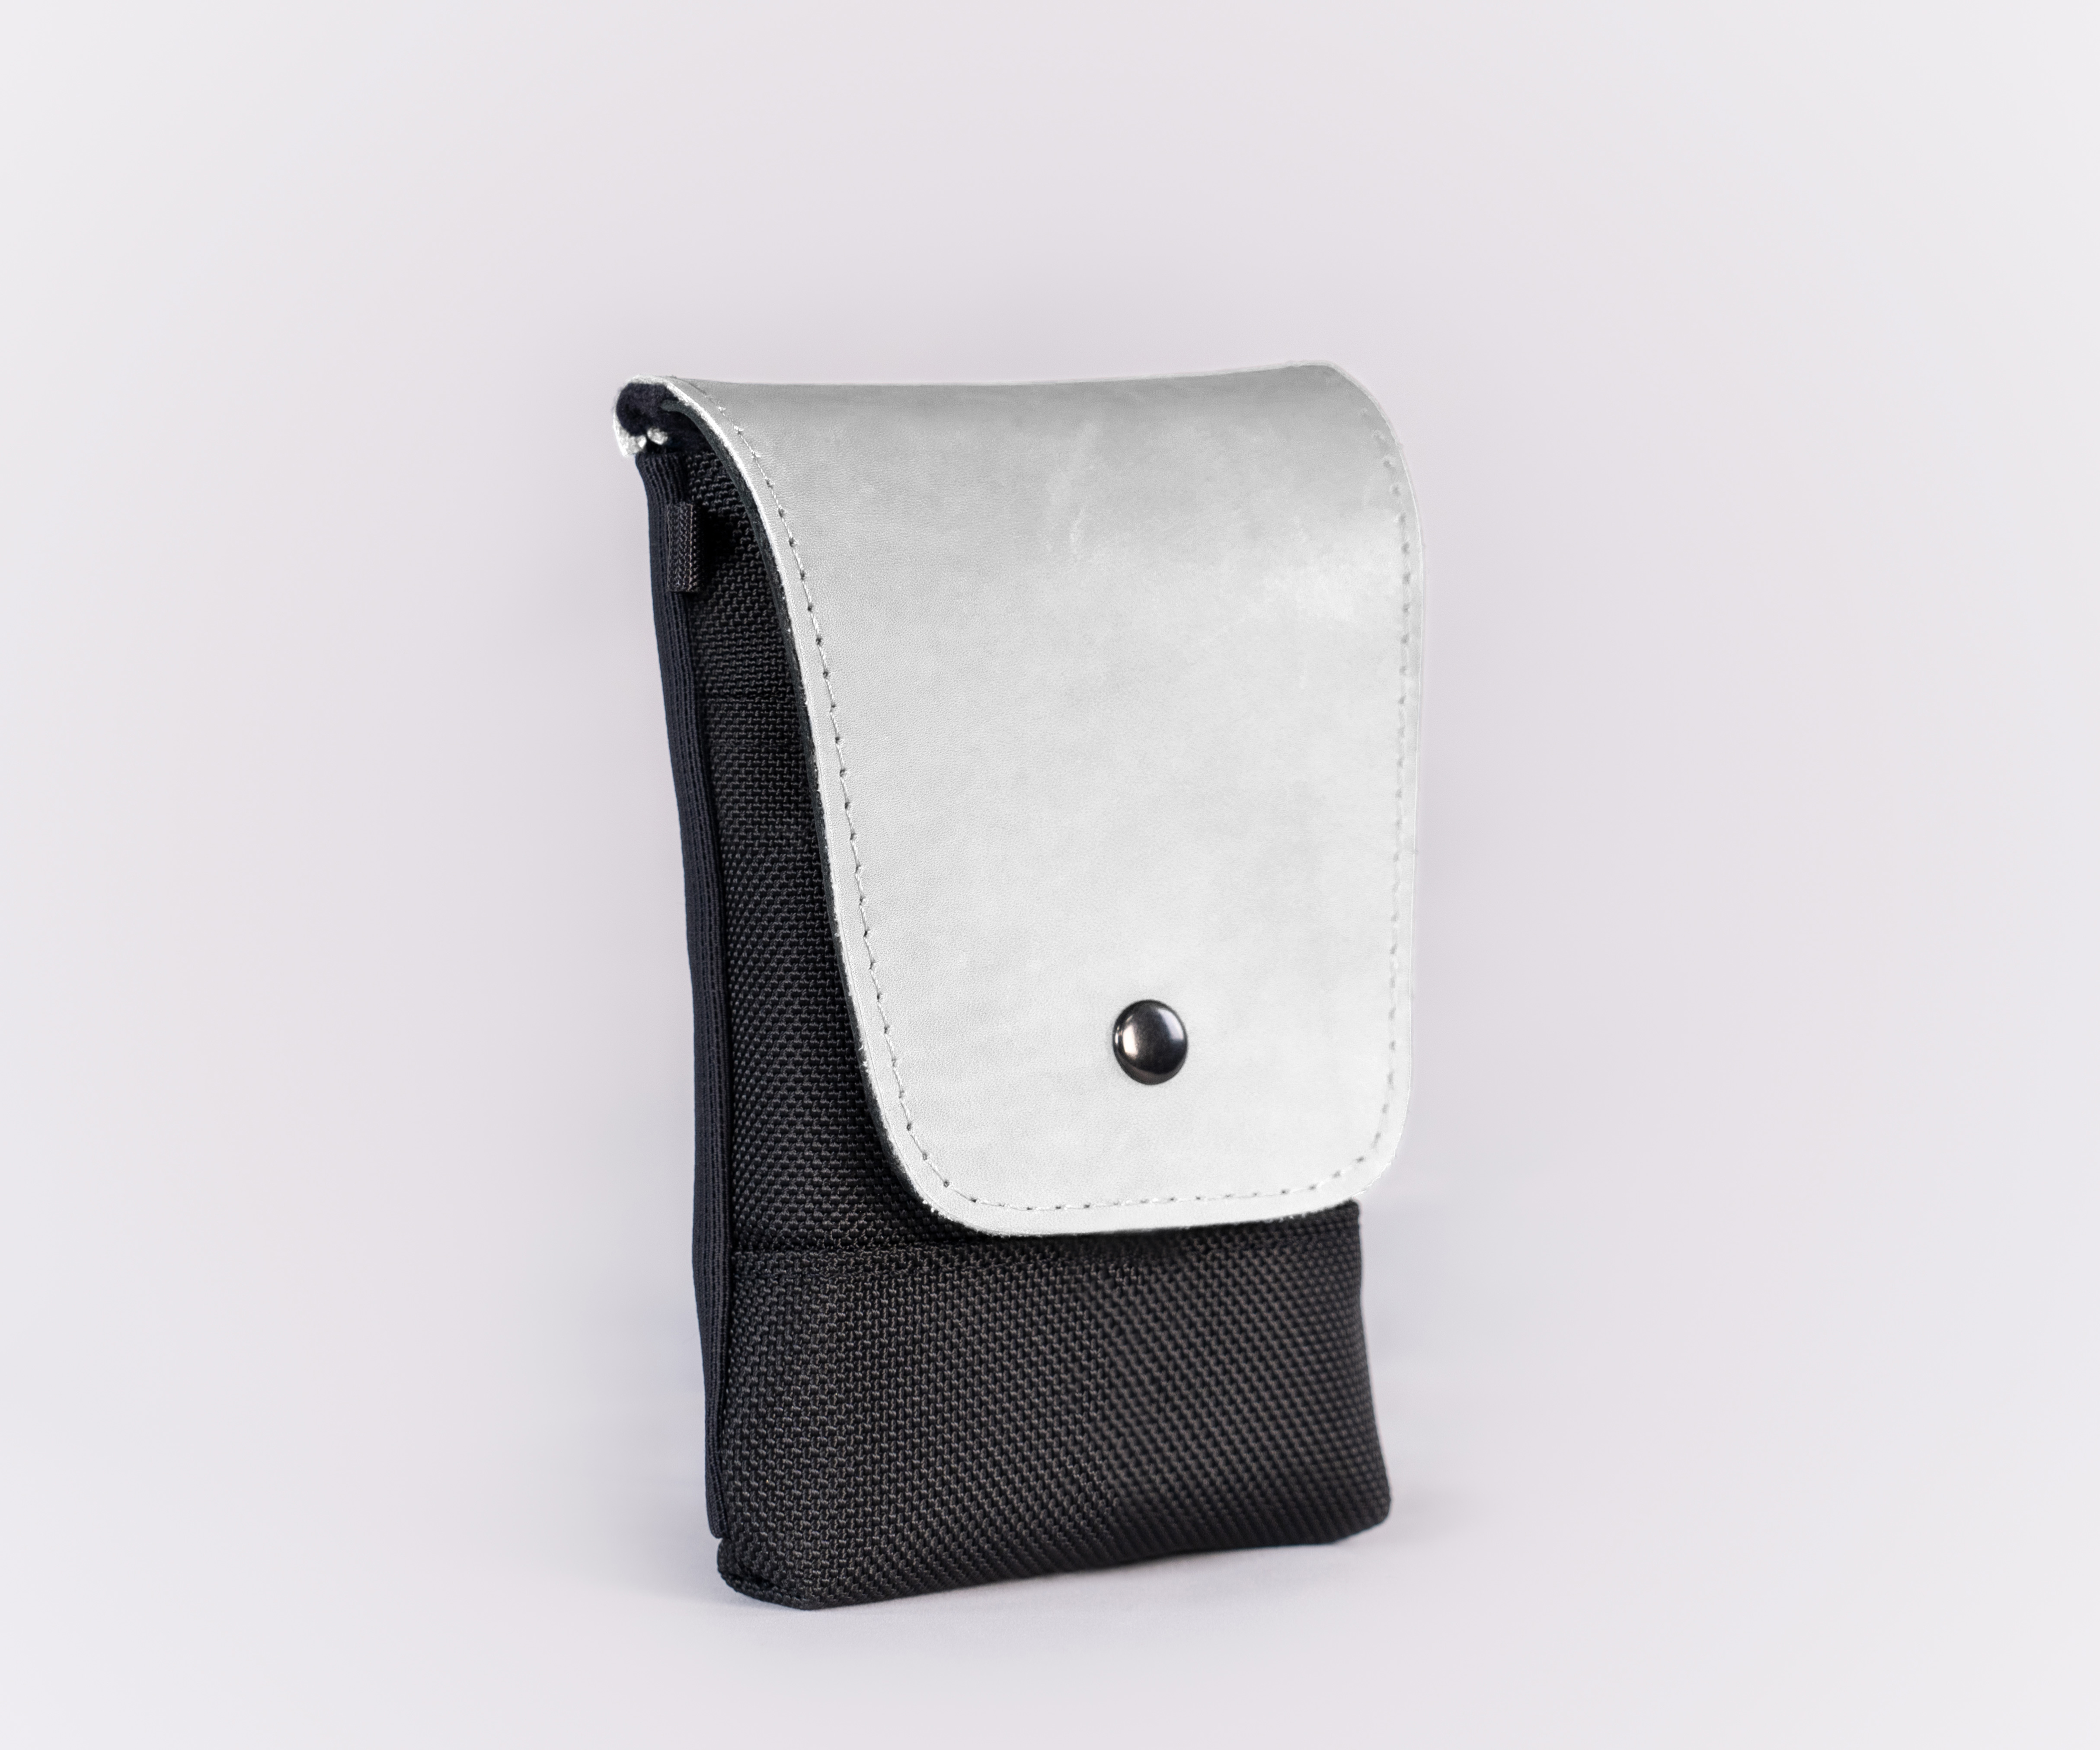 Black ballistic nylon with full-grain white leather flap